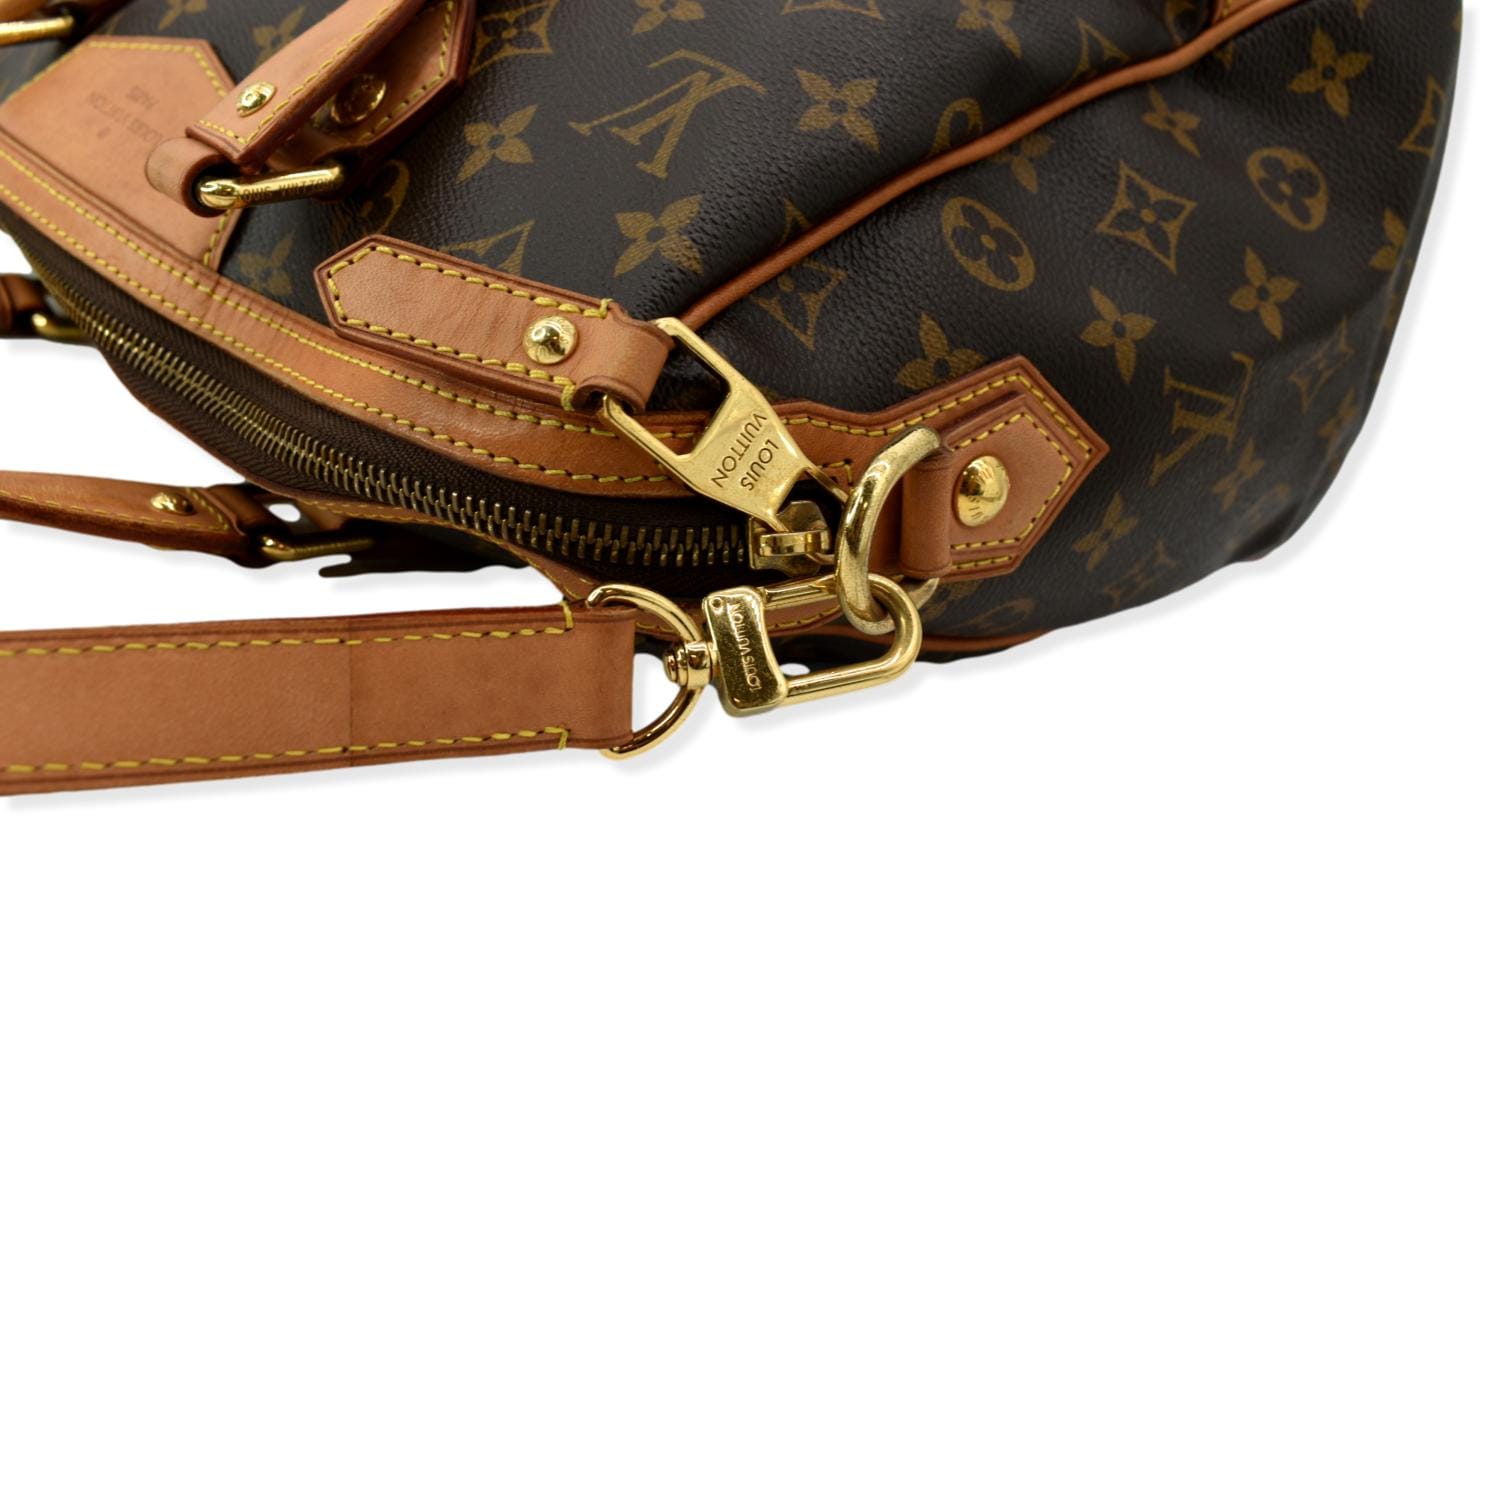  Louis Vuitton LOUIS VUITTON Retiro Handbag M50058 Brown Black  Gold Hardware Monogram Canvas Leather Women's 2 Way Shoulder Bag Boston Bag  Biton, Braun : Clothing, Shoes & Jewelry